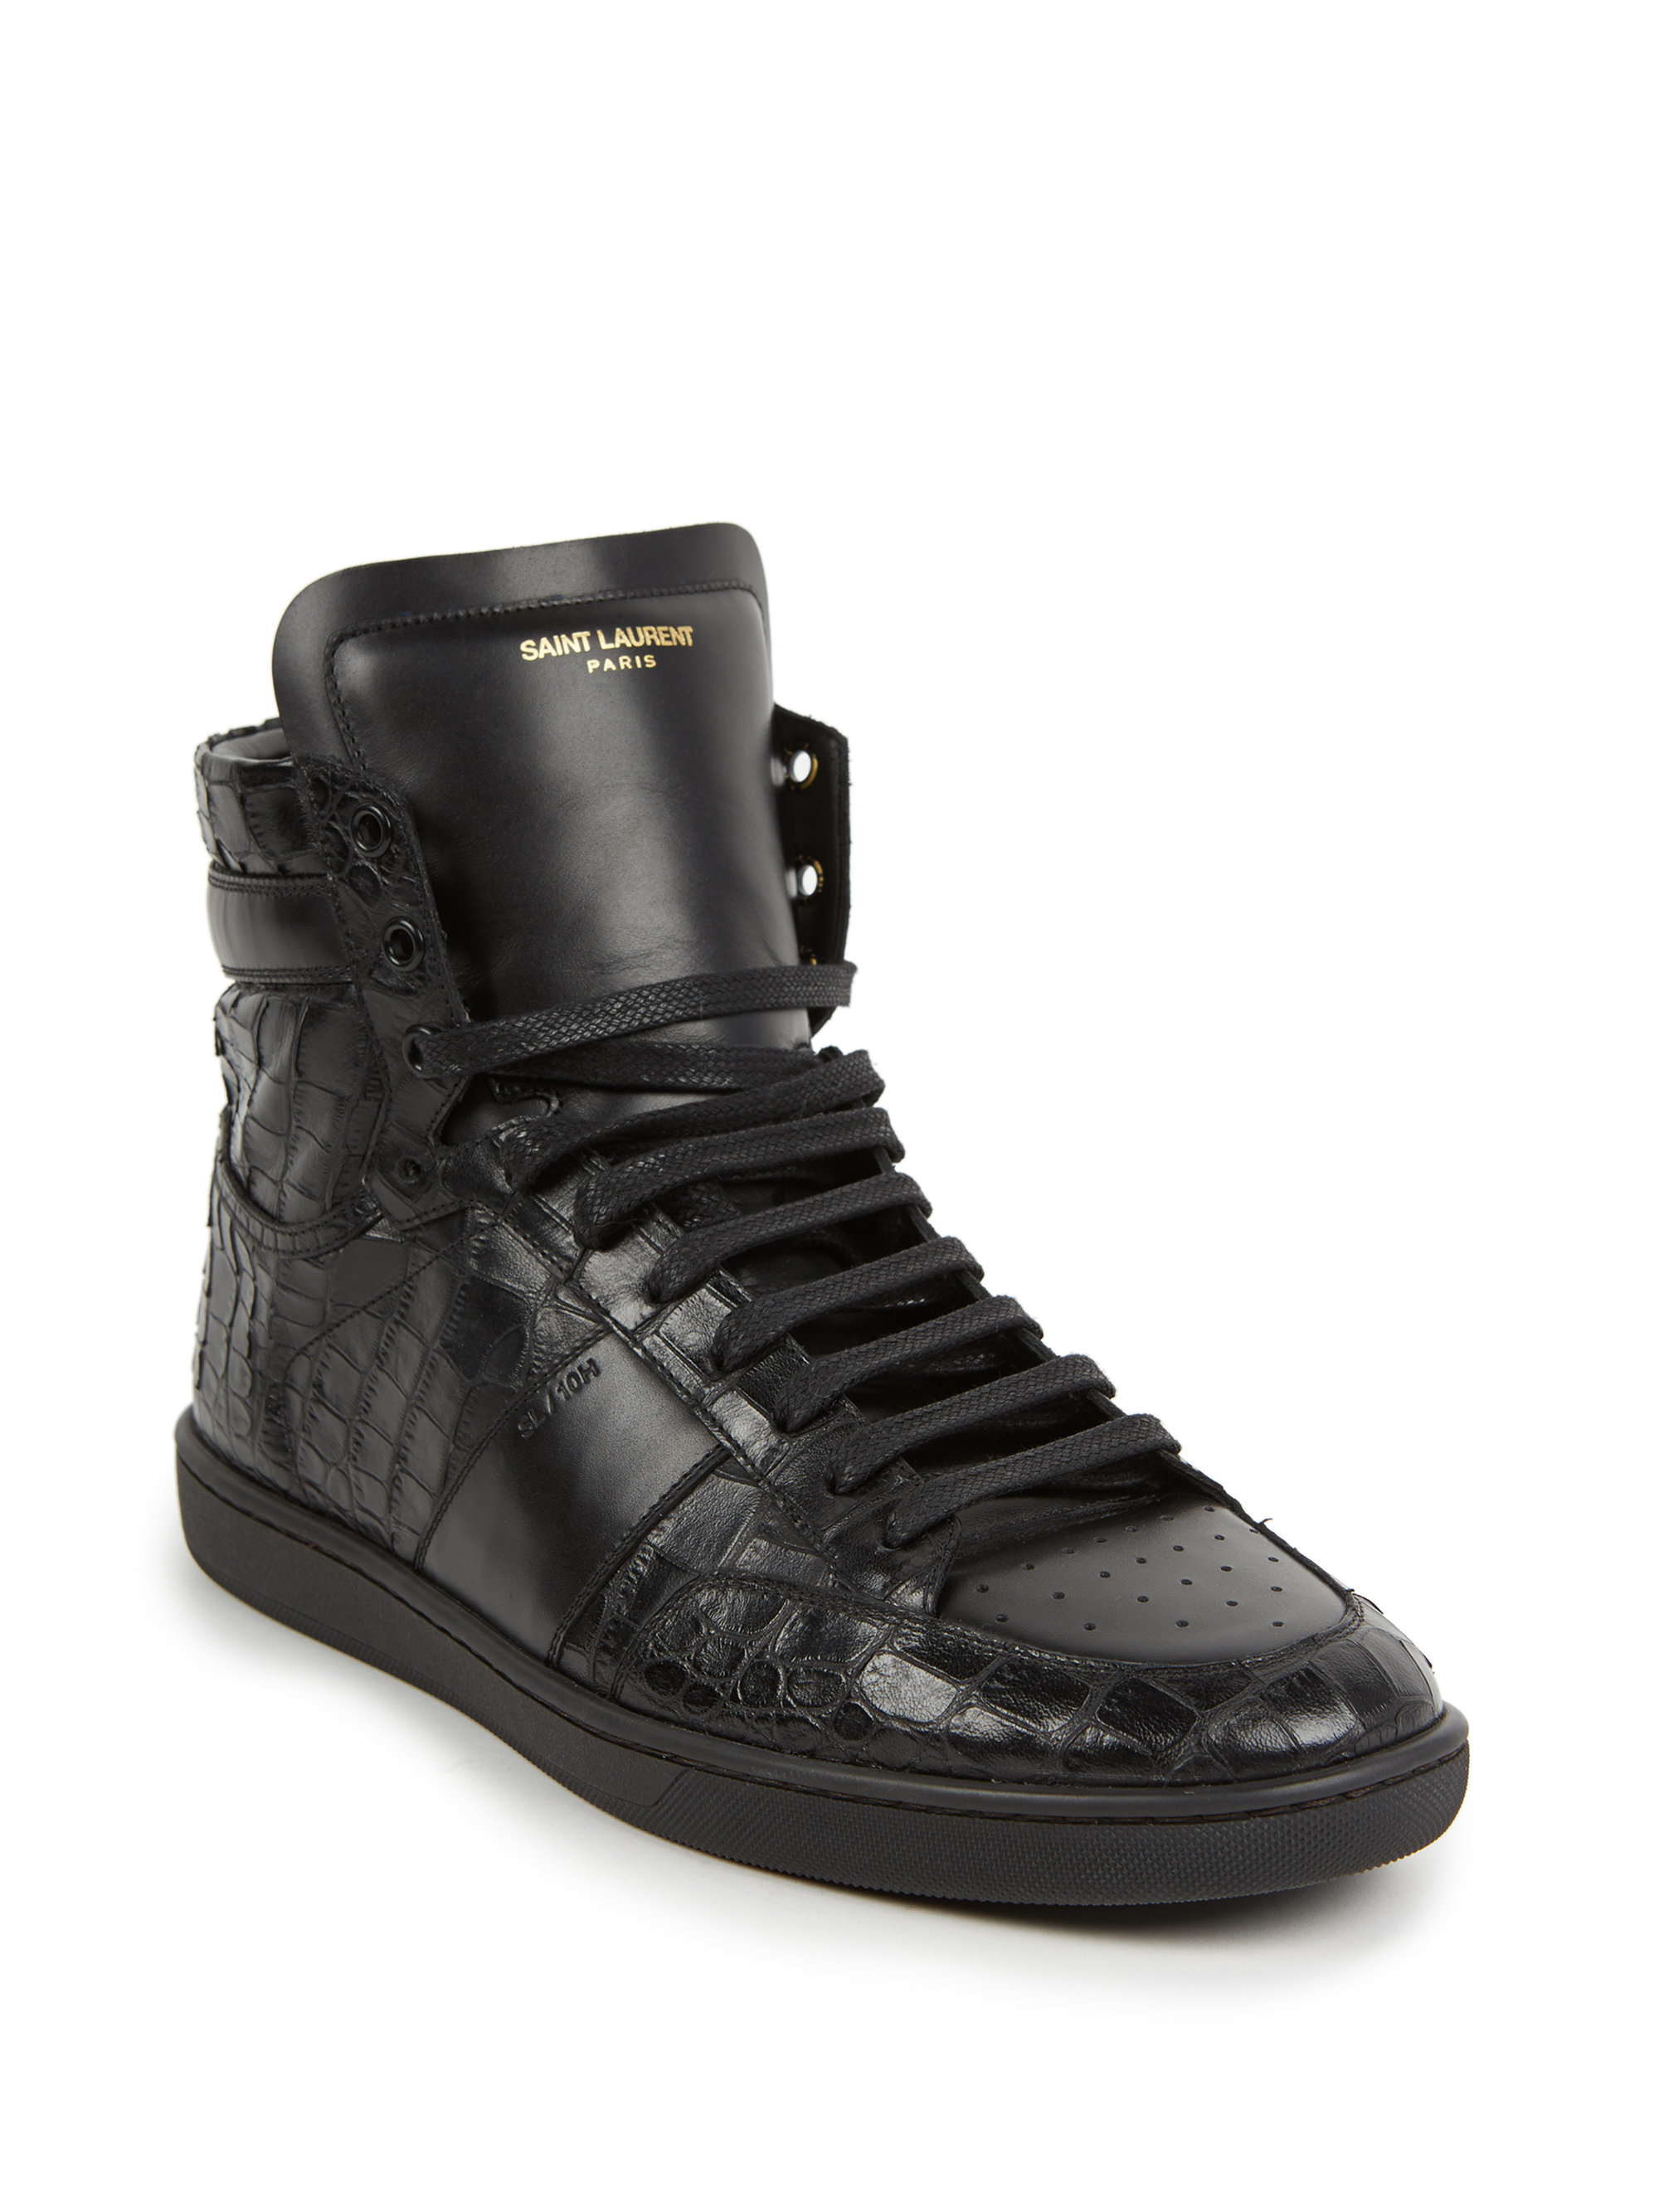 Lyst - Saint Laurent Croc Embossed Leather High-top Sneakers in Black ...